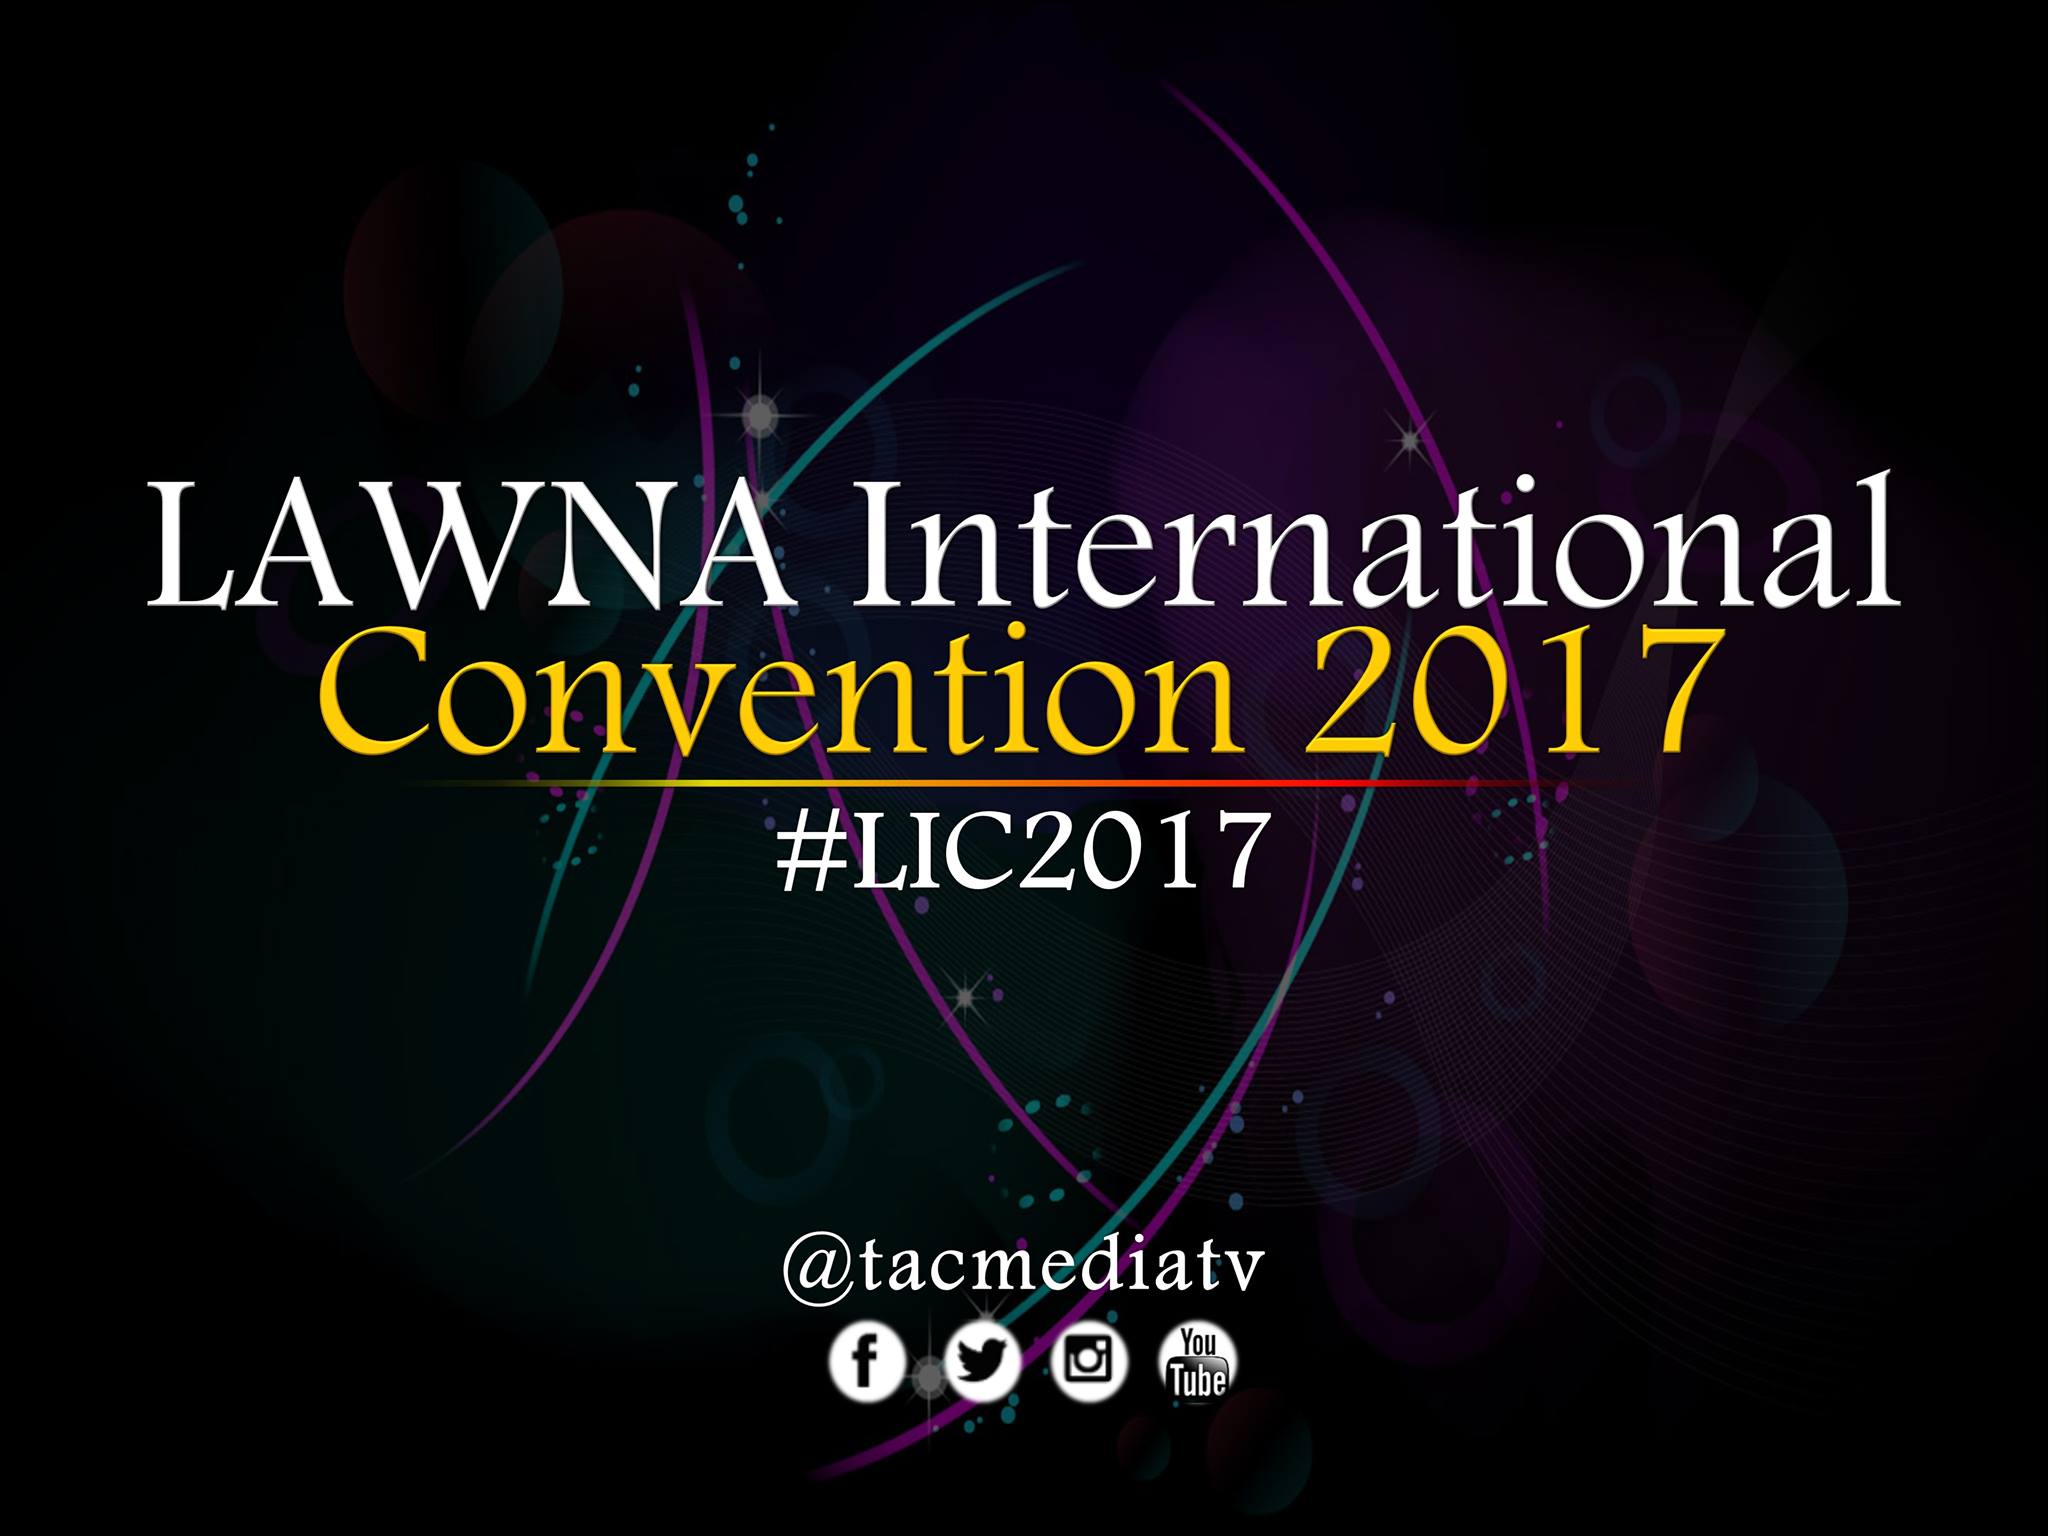 LAWNA International Convention 2017